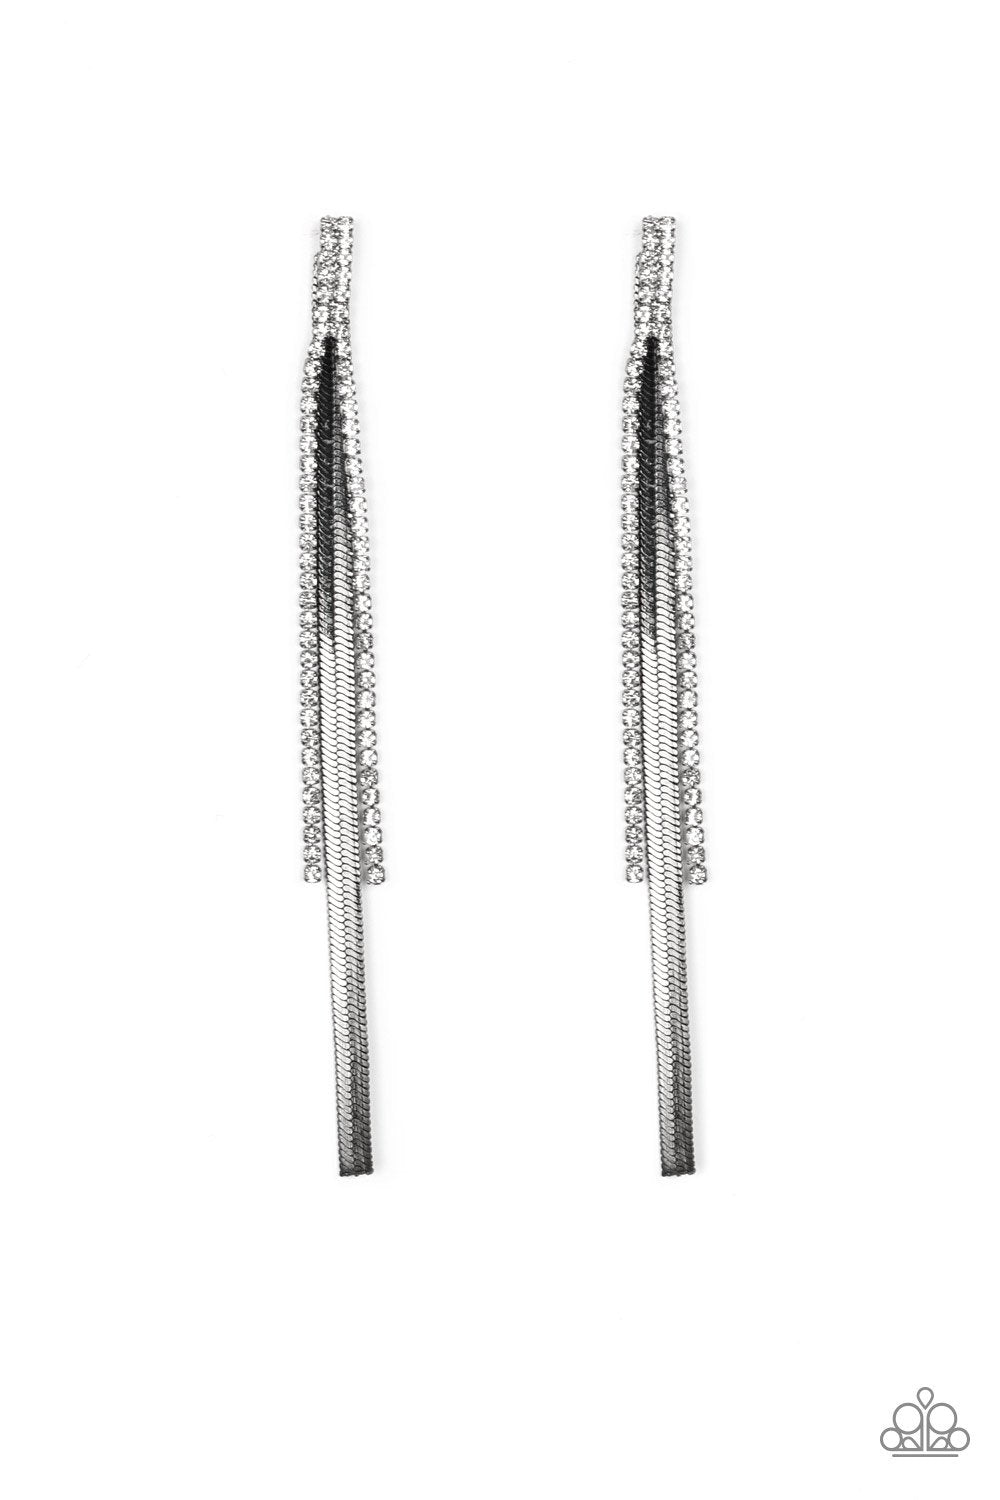 Flavor of the SLEEK Black Gunmetal and White Rhinestone Chain Earrings - Paparazzi Accessories-CarasShop.com - $5 Jewelry by Cara Jewels